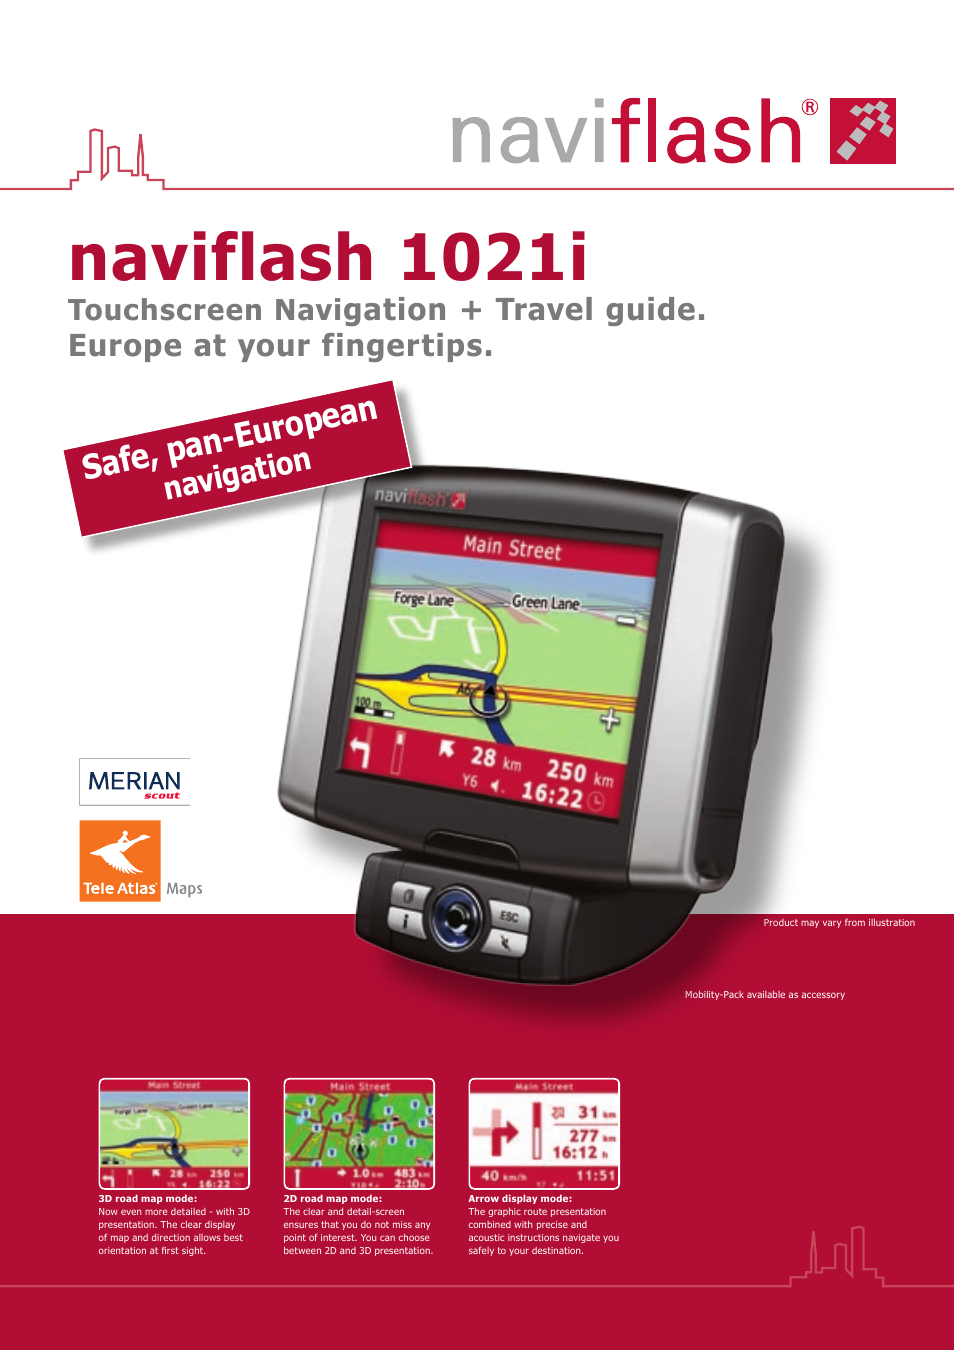 Touchscreen Navigation + Travel Guide Naviflash 1021